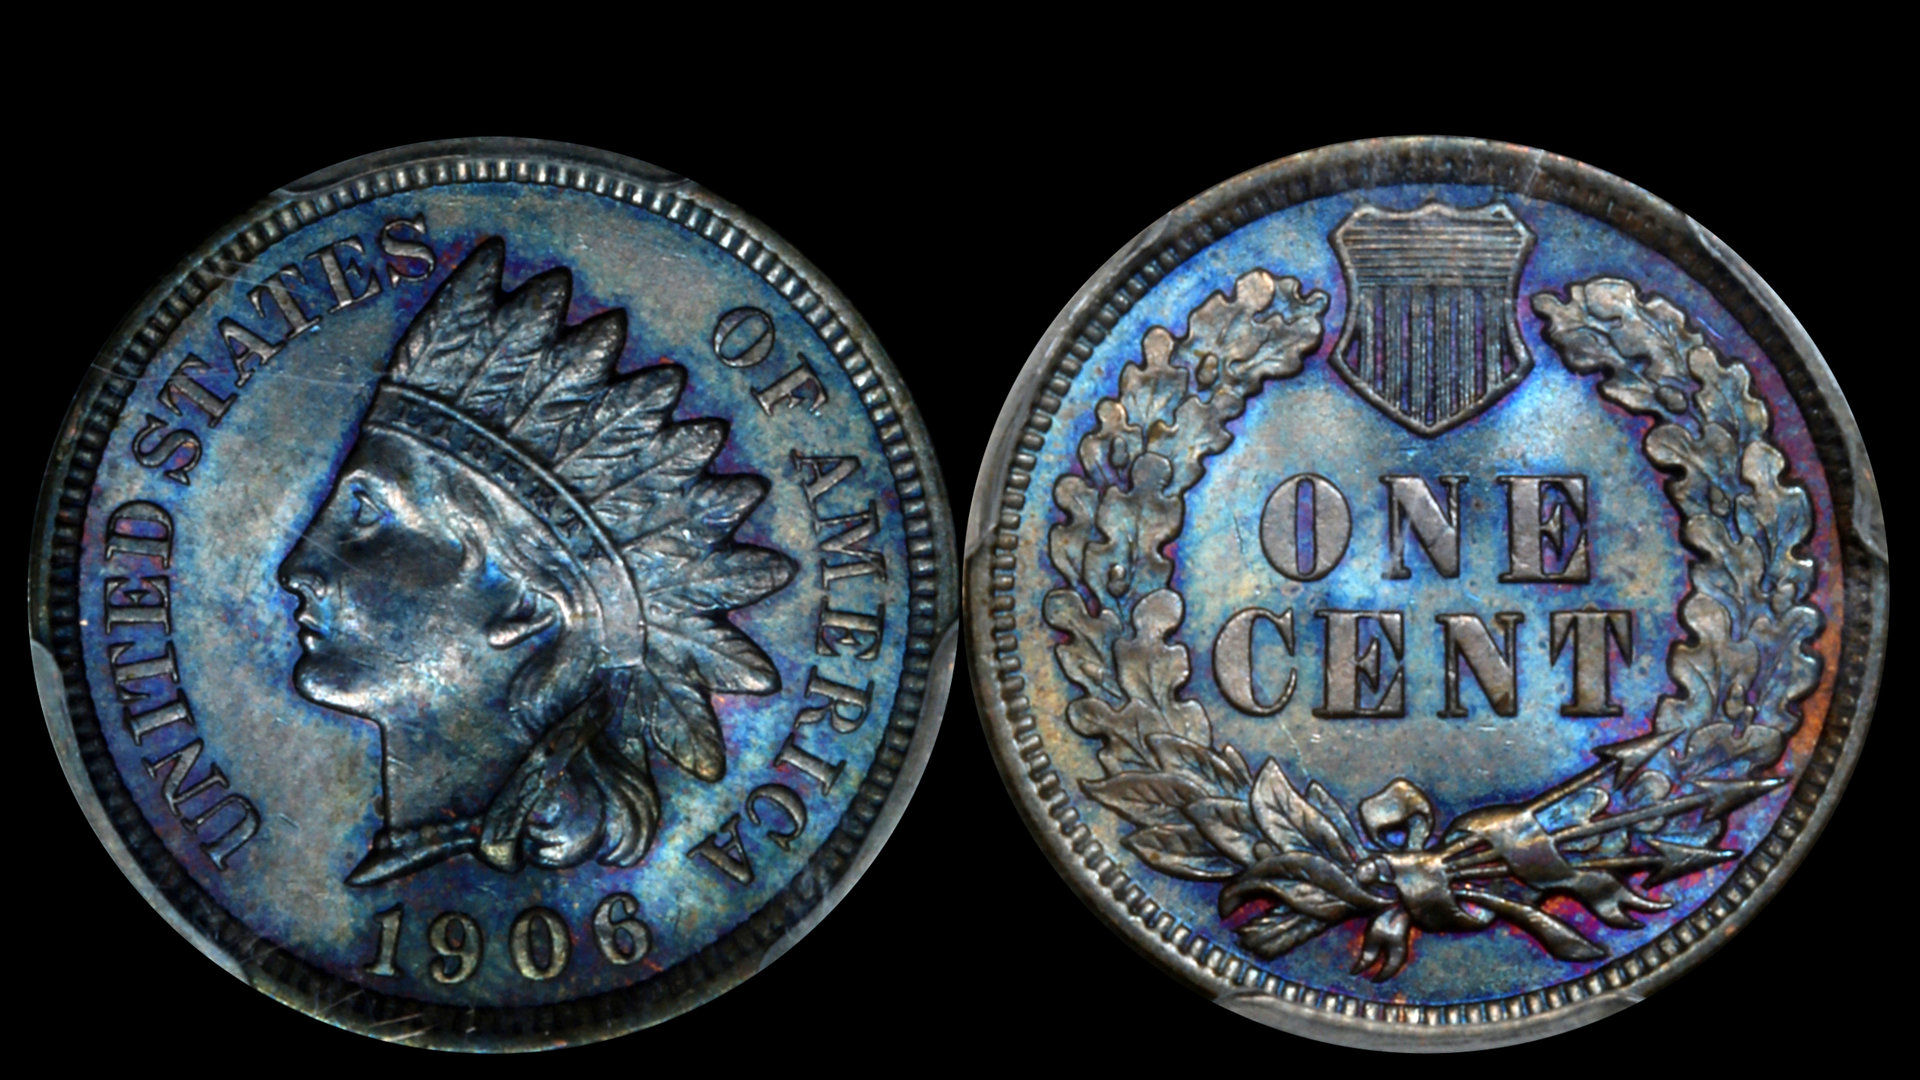 1906 Indian Cent PCGS MS64 BN.jpg